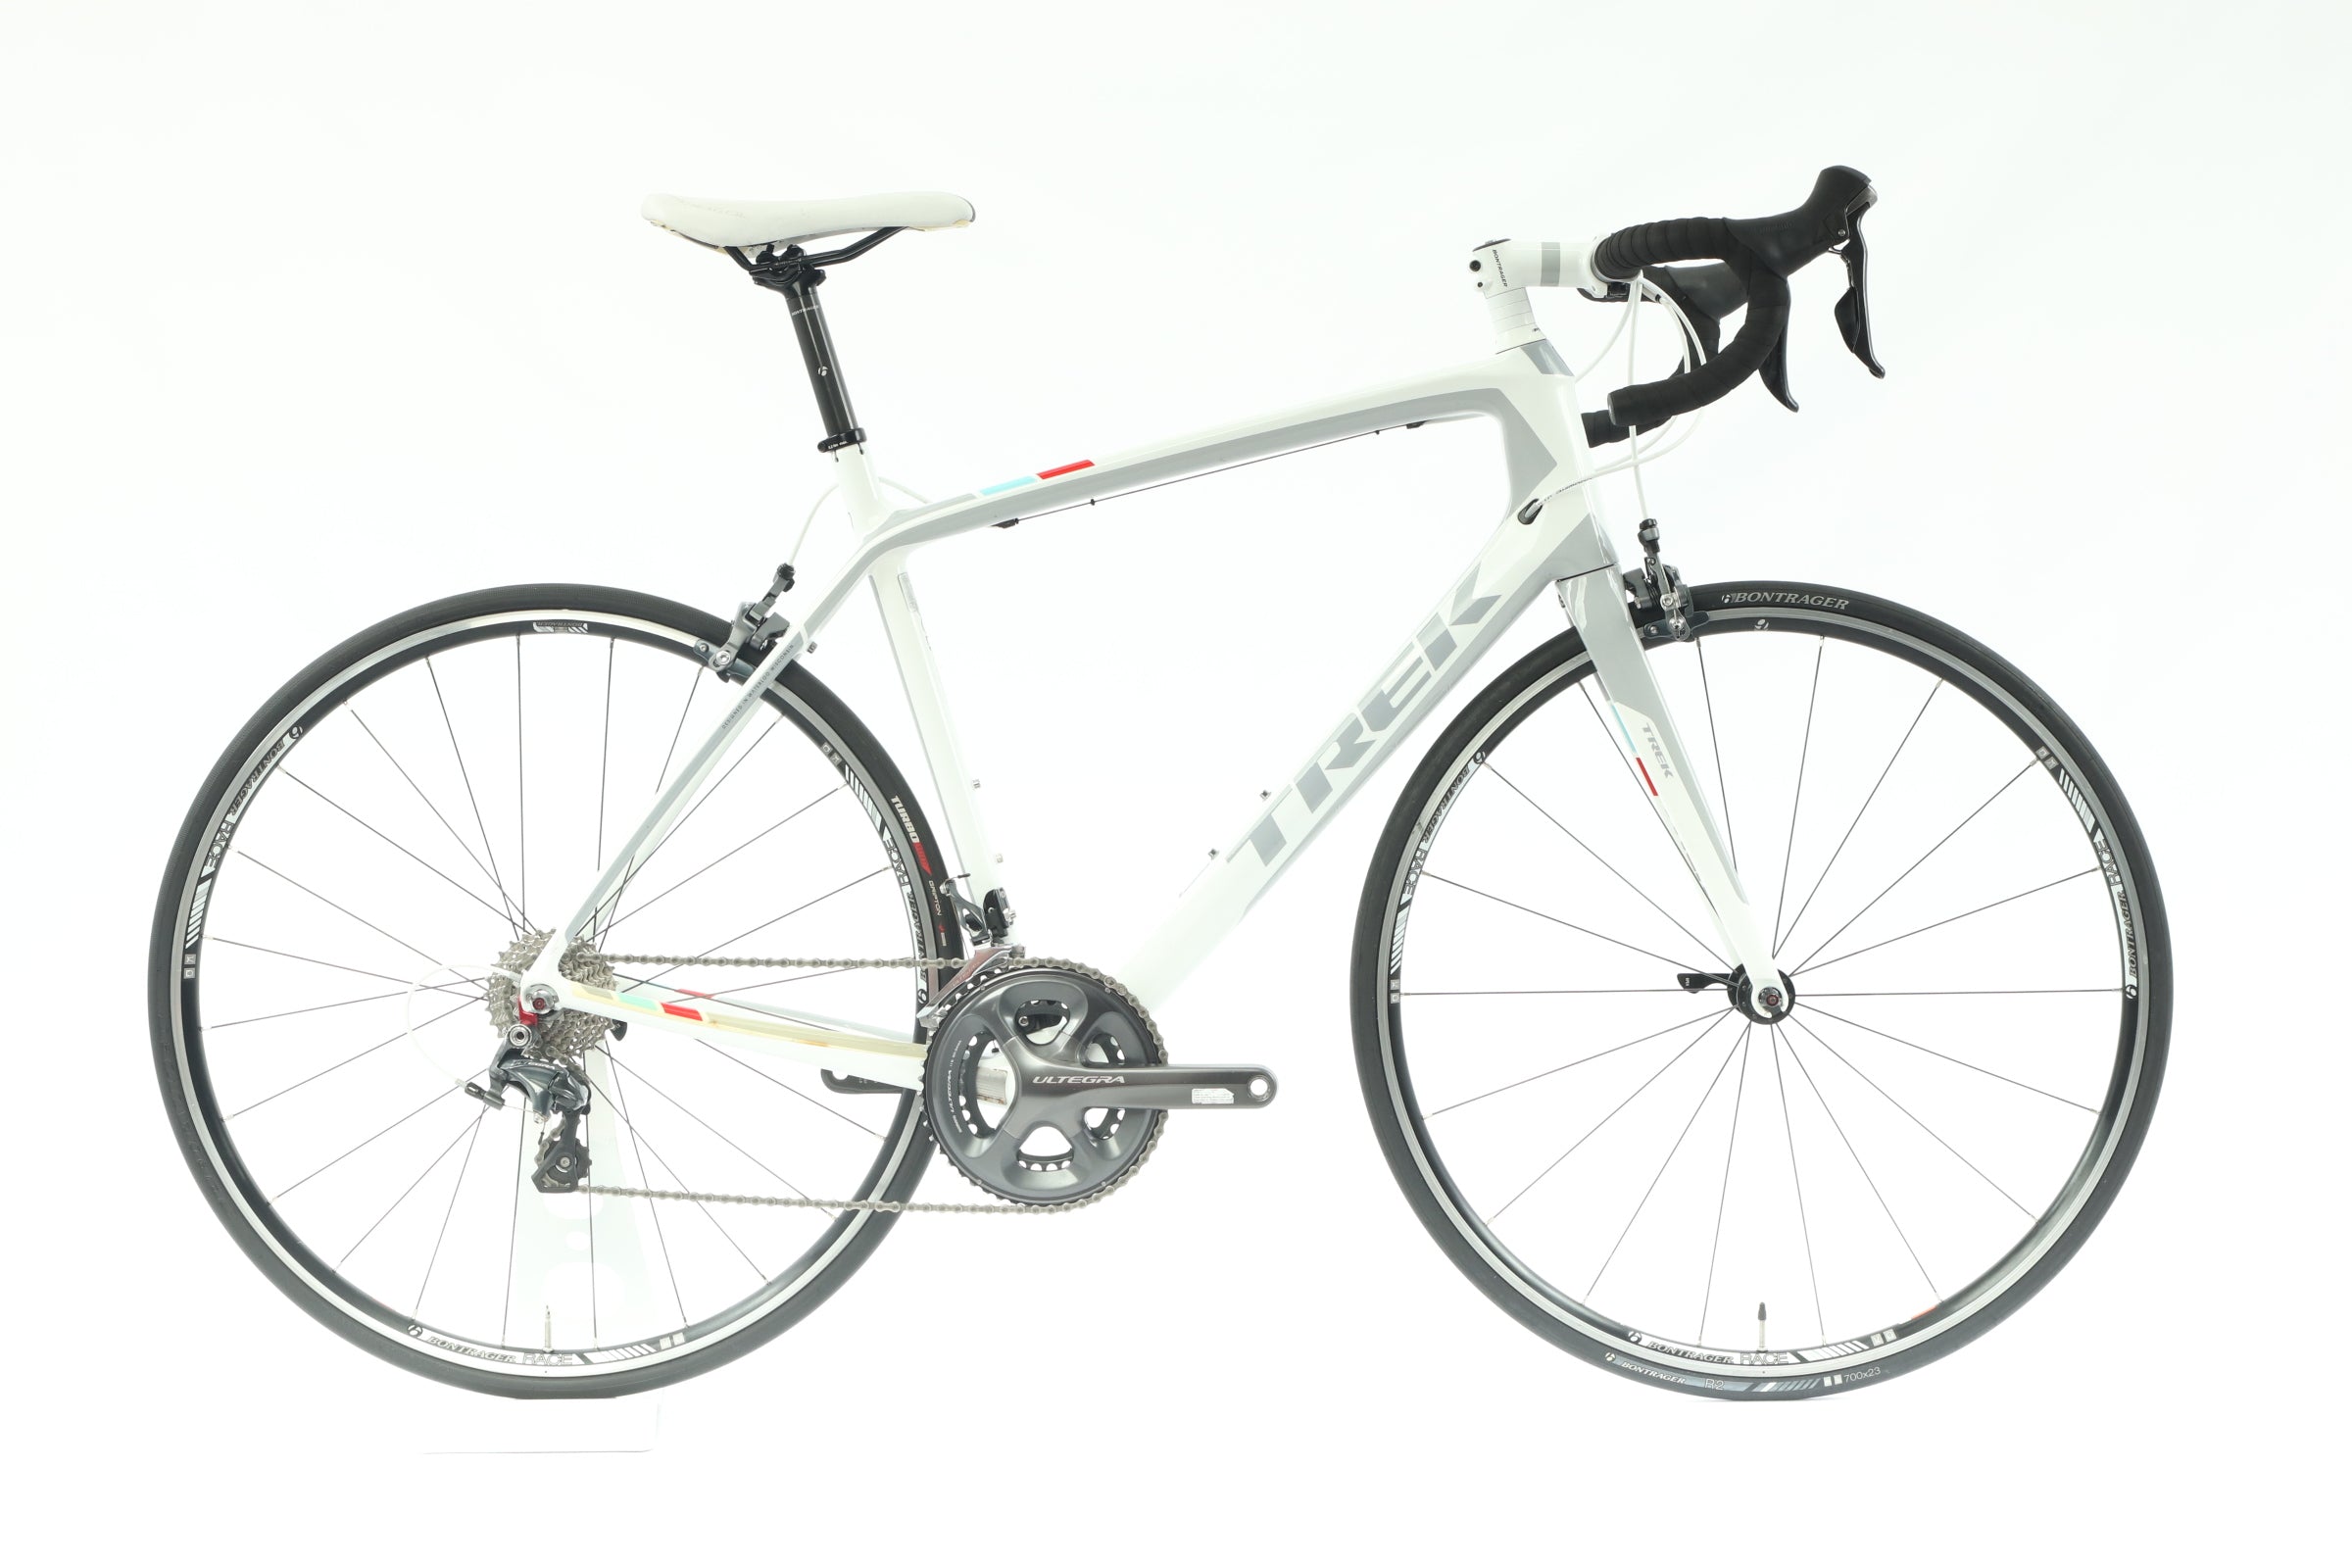 2014 Trek Madone 4.7 Compact Road Bike - 58cm